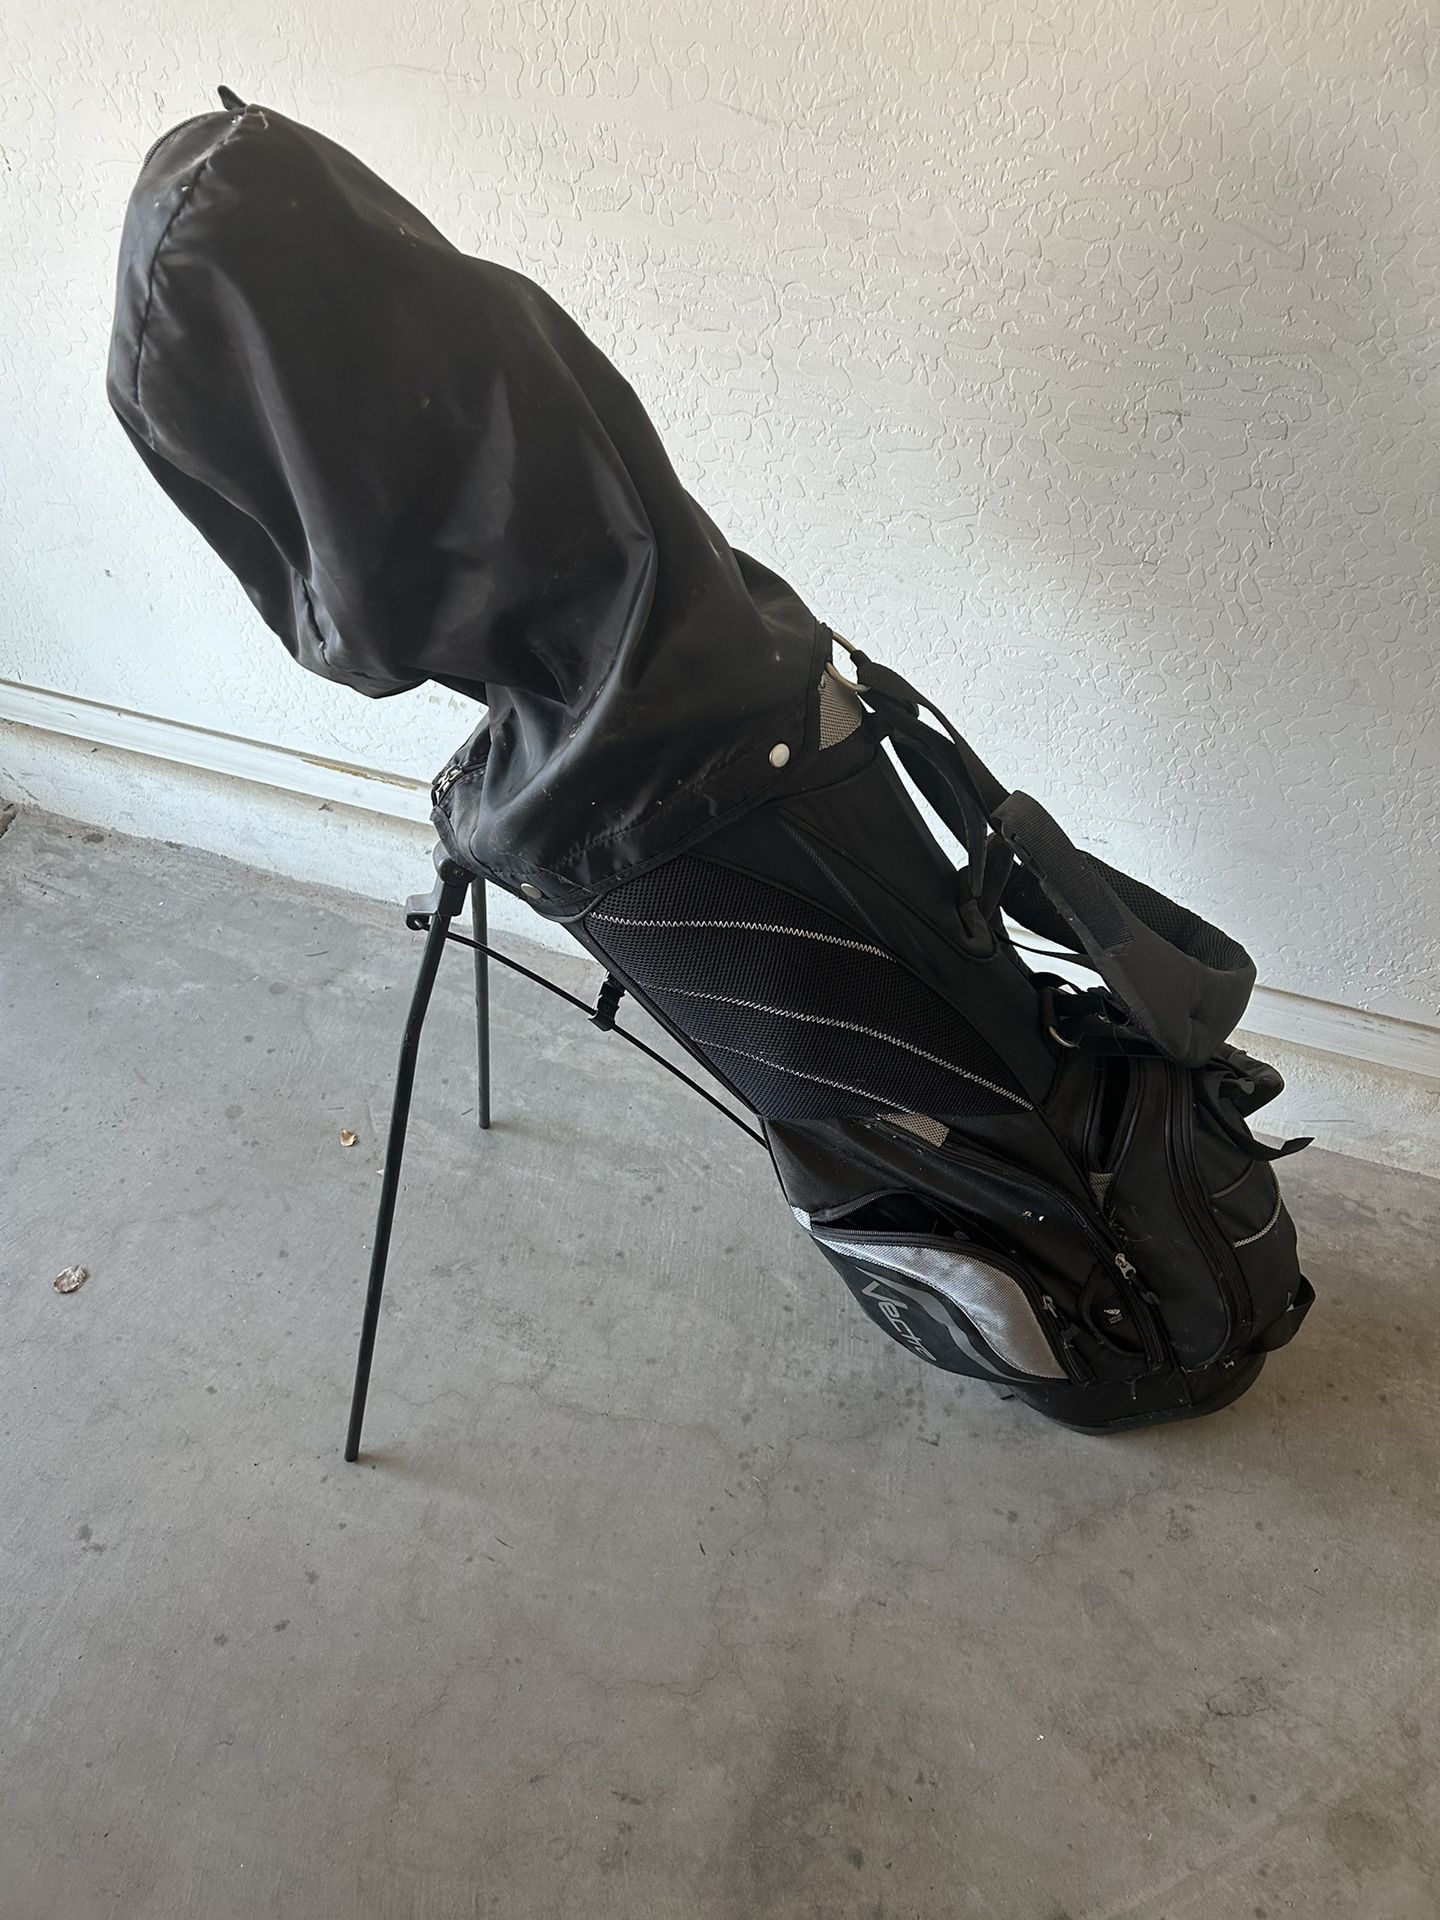 Custom Graphite Golf Clubs And Bag